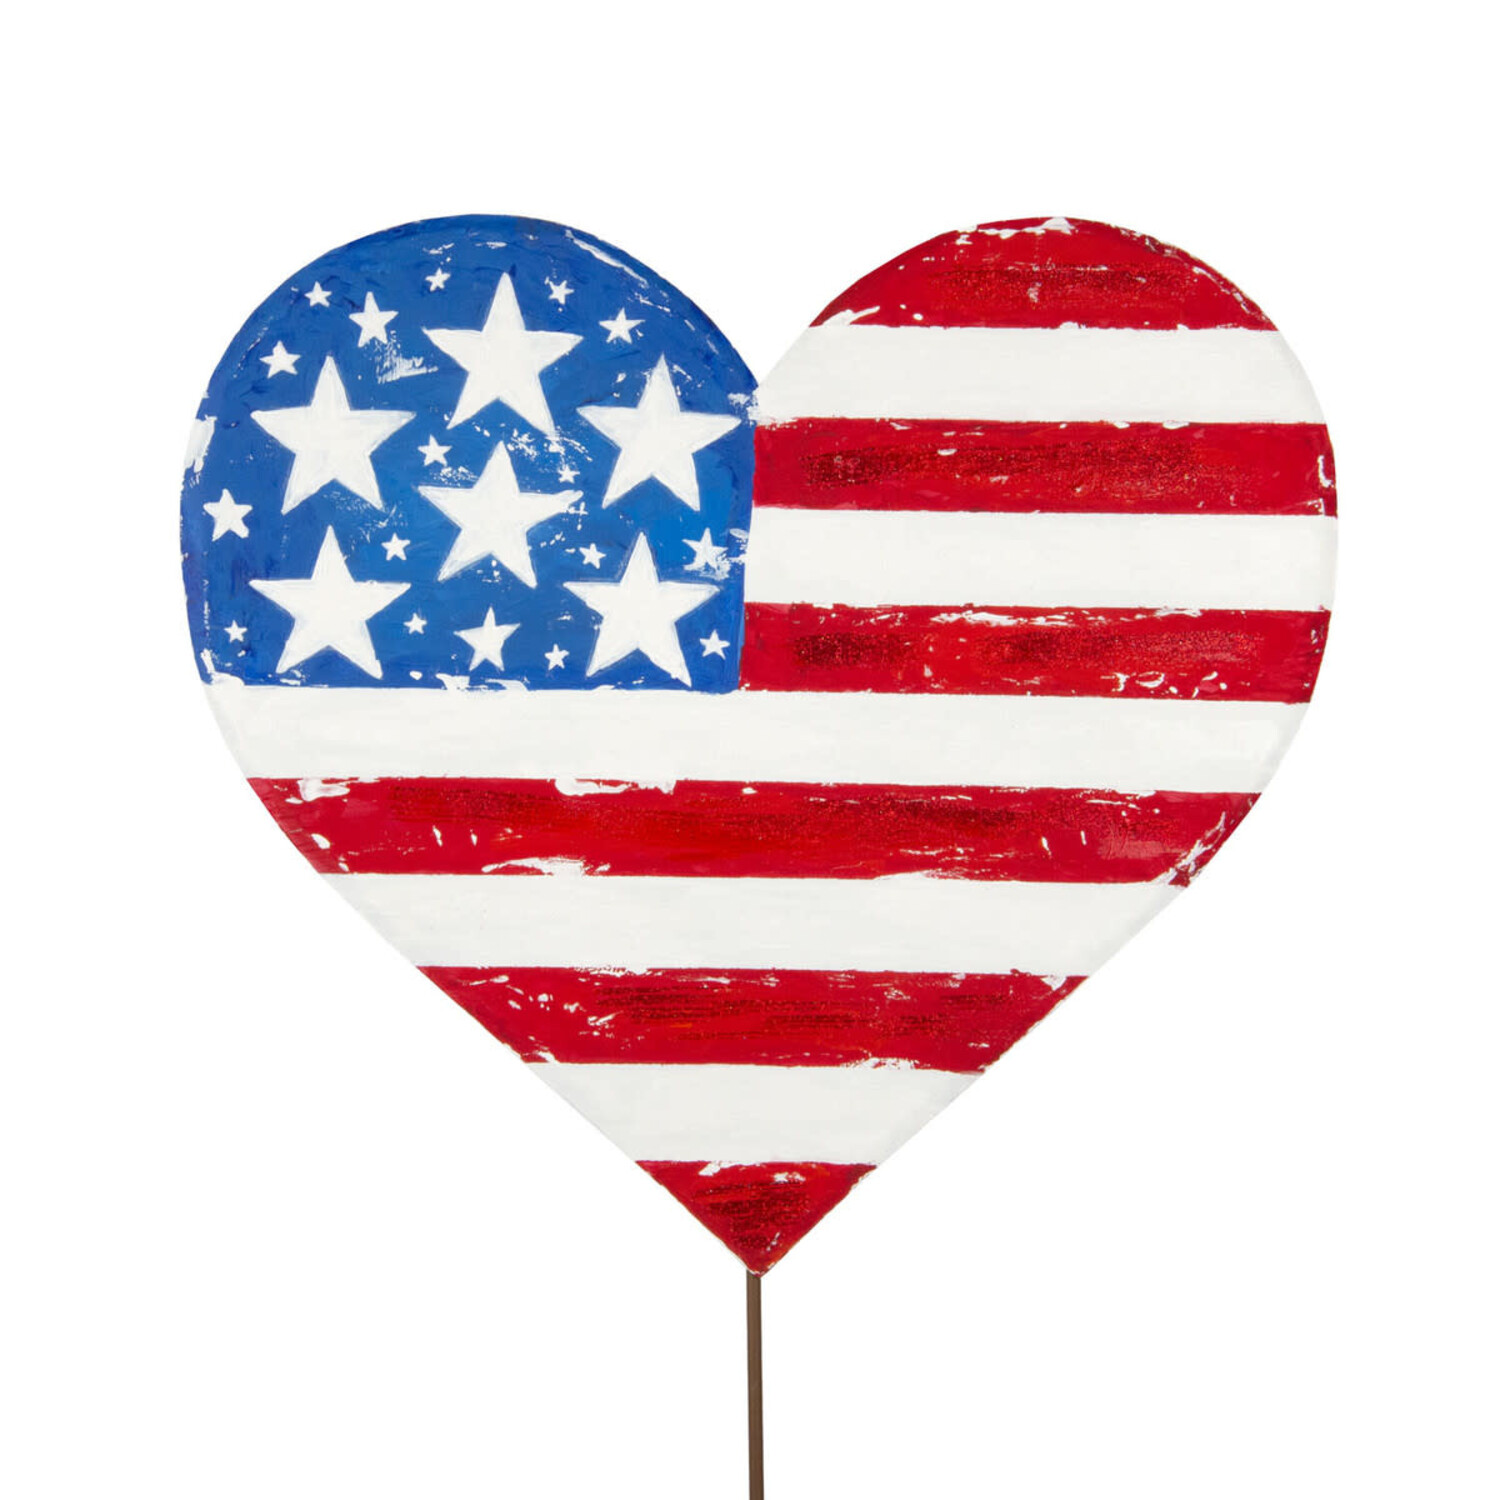 https://cdn.shoplightspeed.com/shops/606996/files/53936654/1500x4000x3/the-round-top-collection-messy-flag-heart.jpg